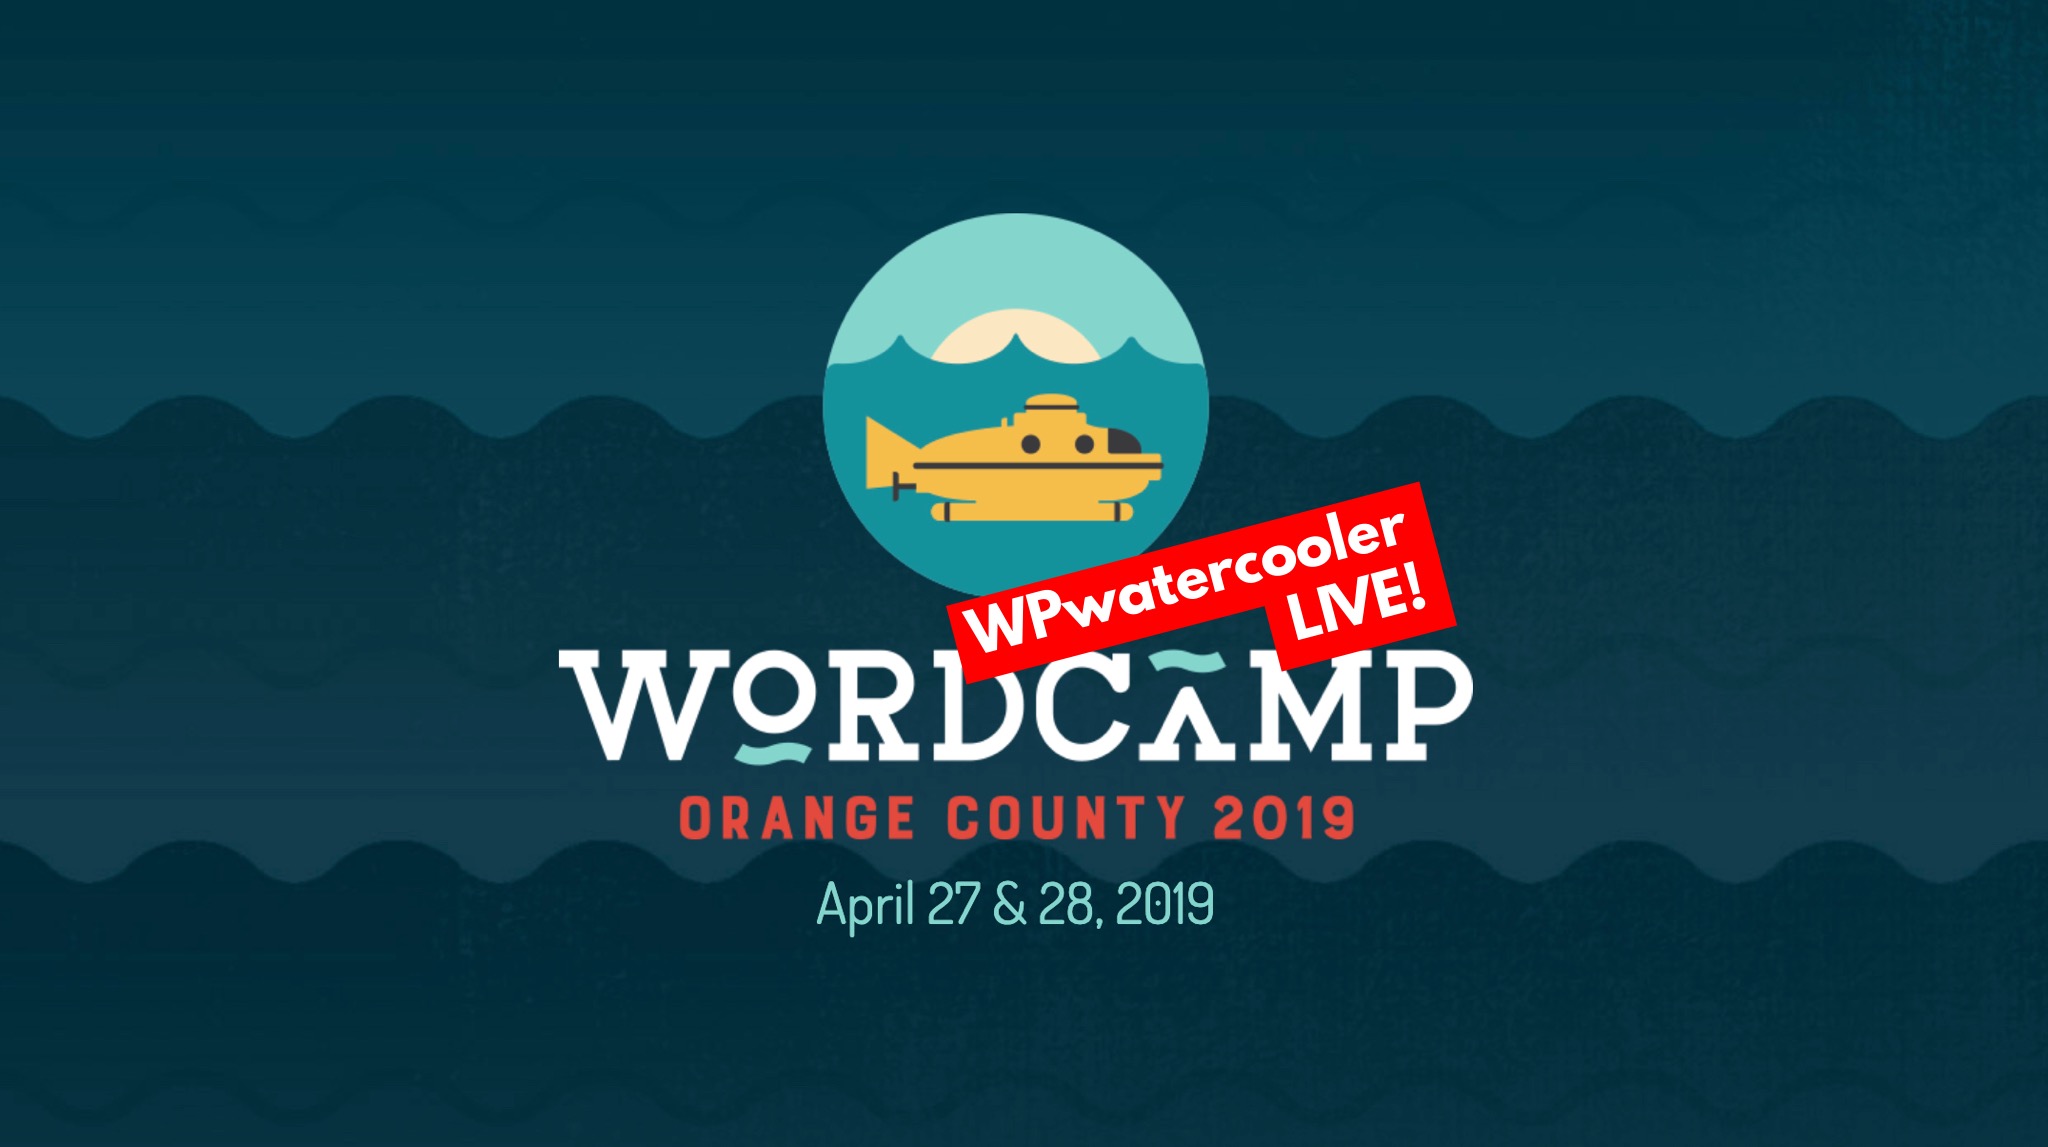 EP319 – WPwatercooler Live at WordCamp OC 2019 #WCOC